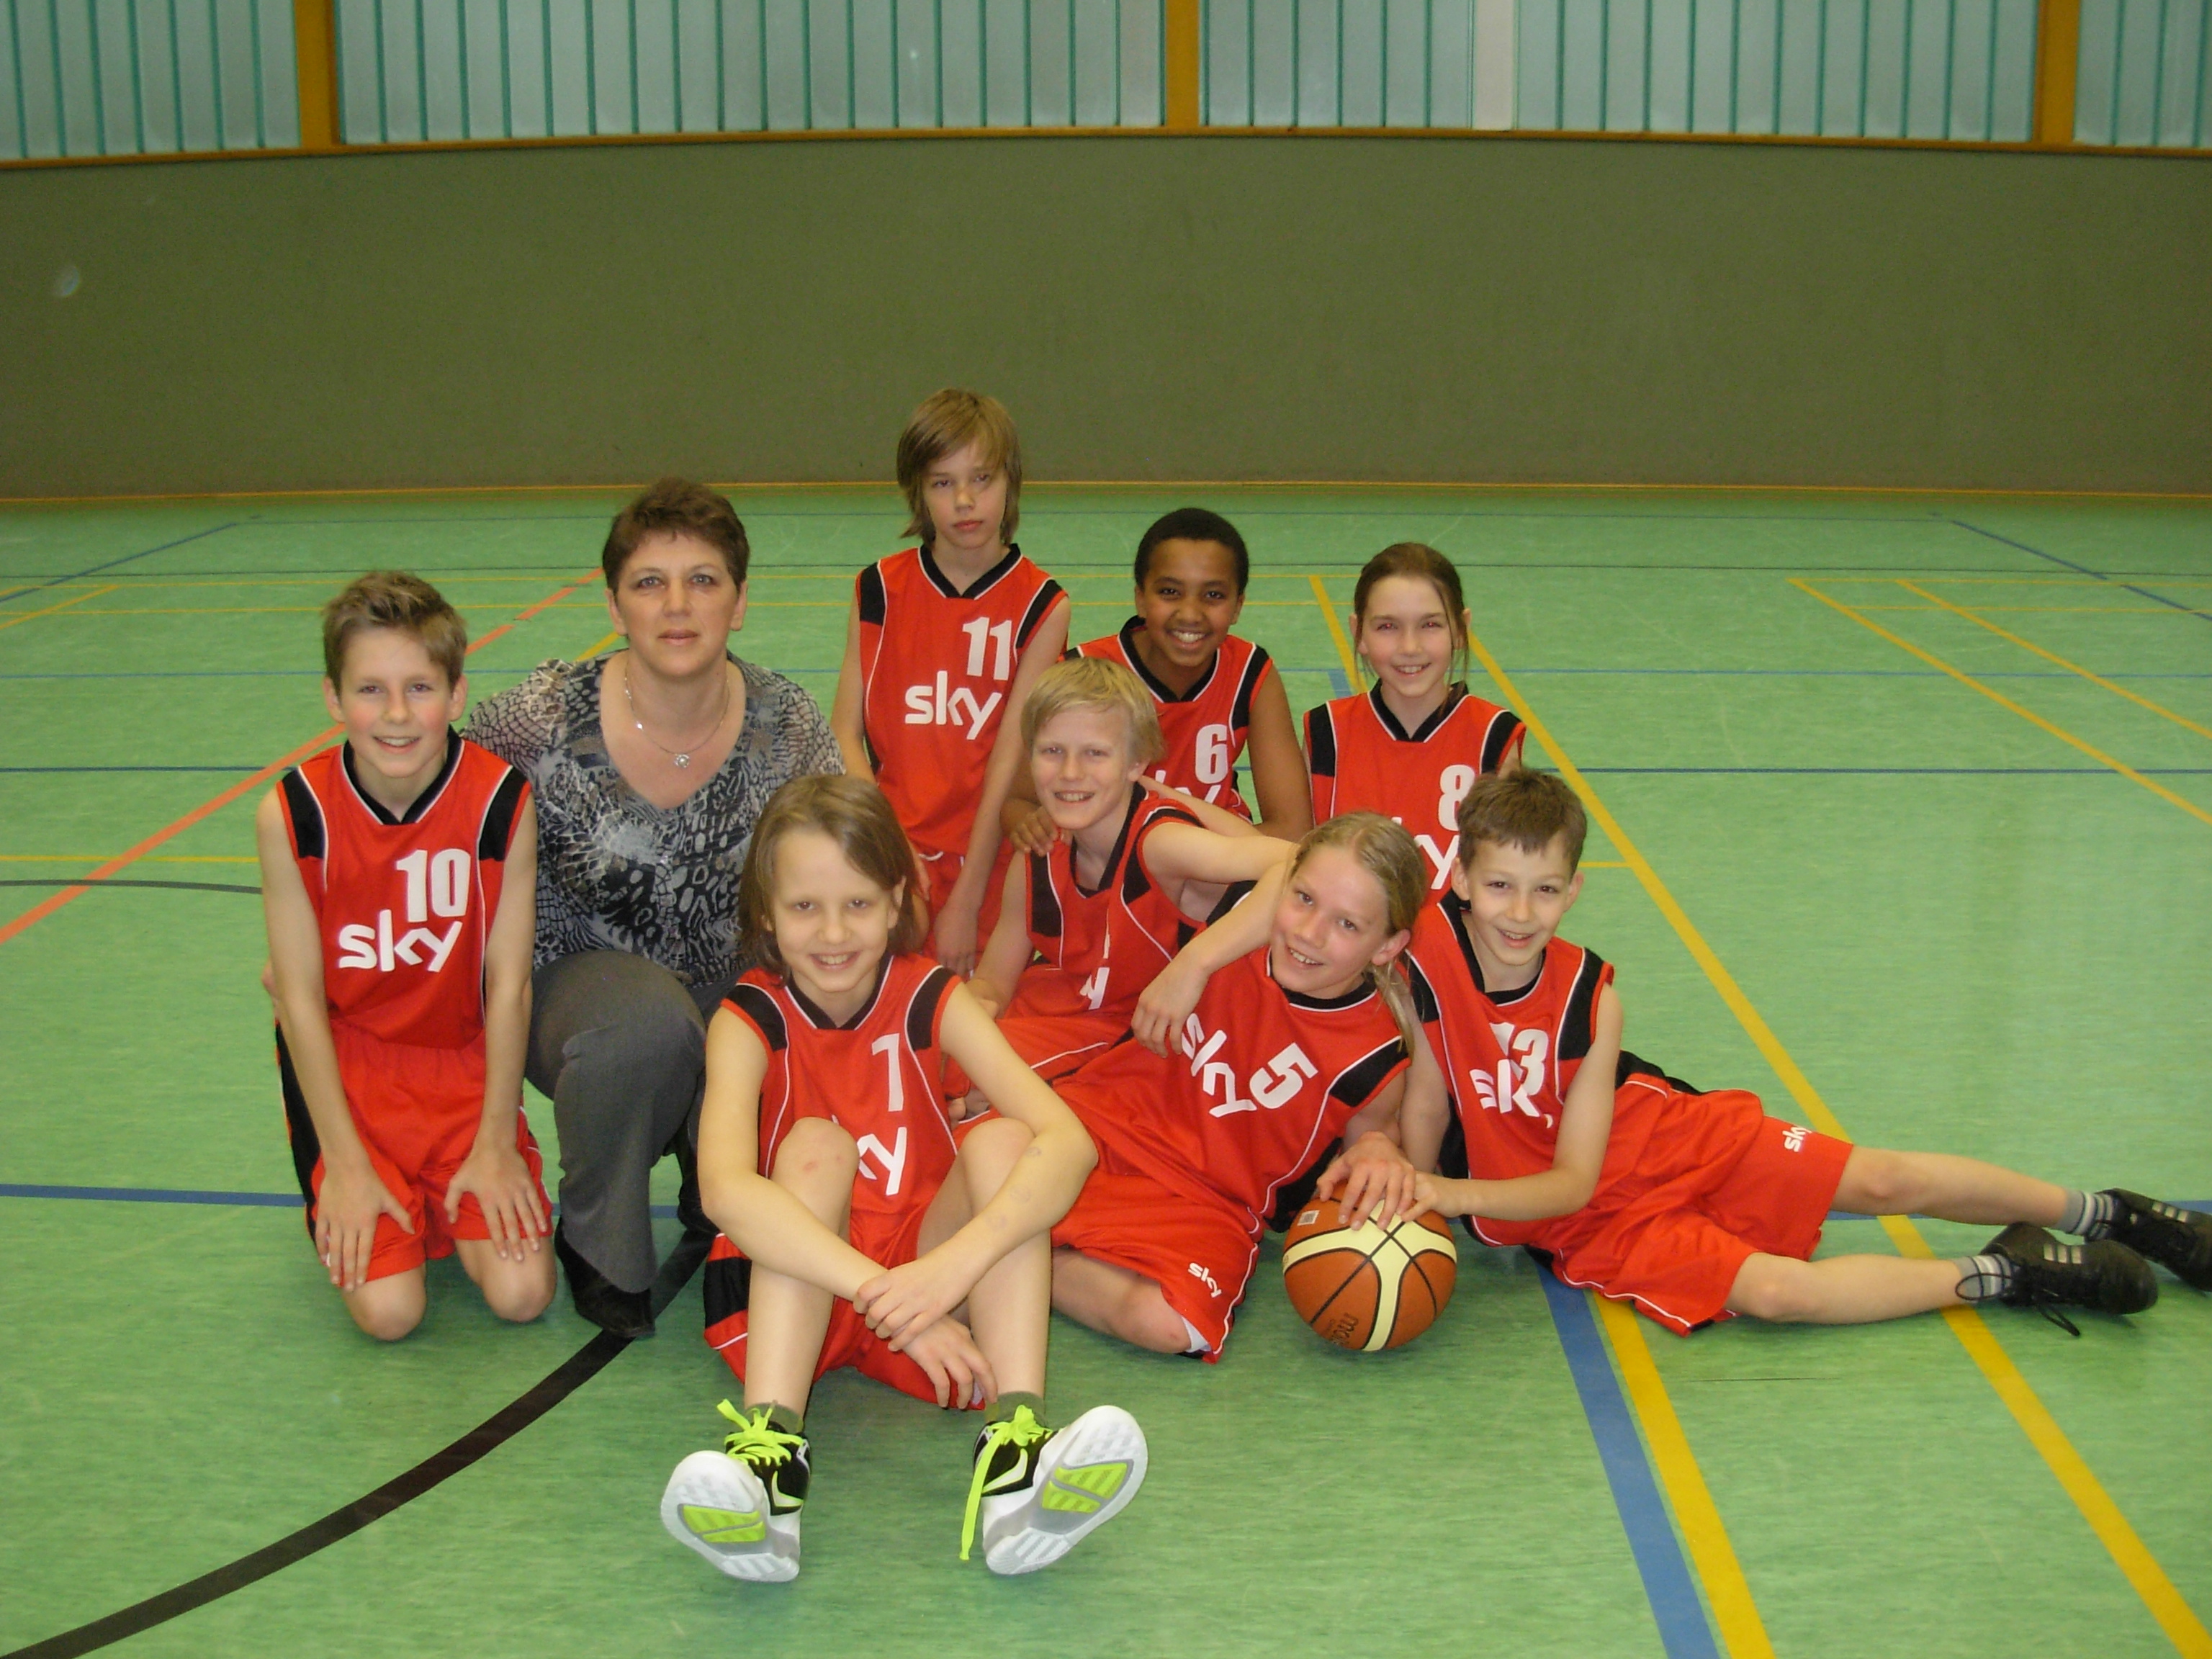 tl_files/bilder/2012-2013/presse/basketball_u12_sv_hambuehren.JPG